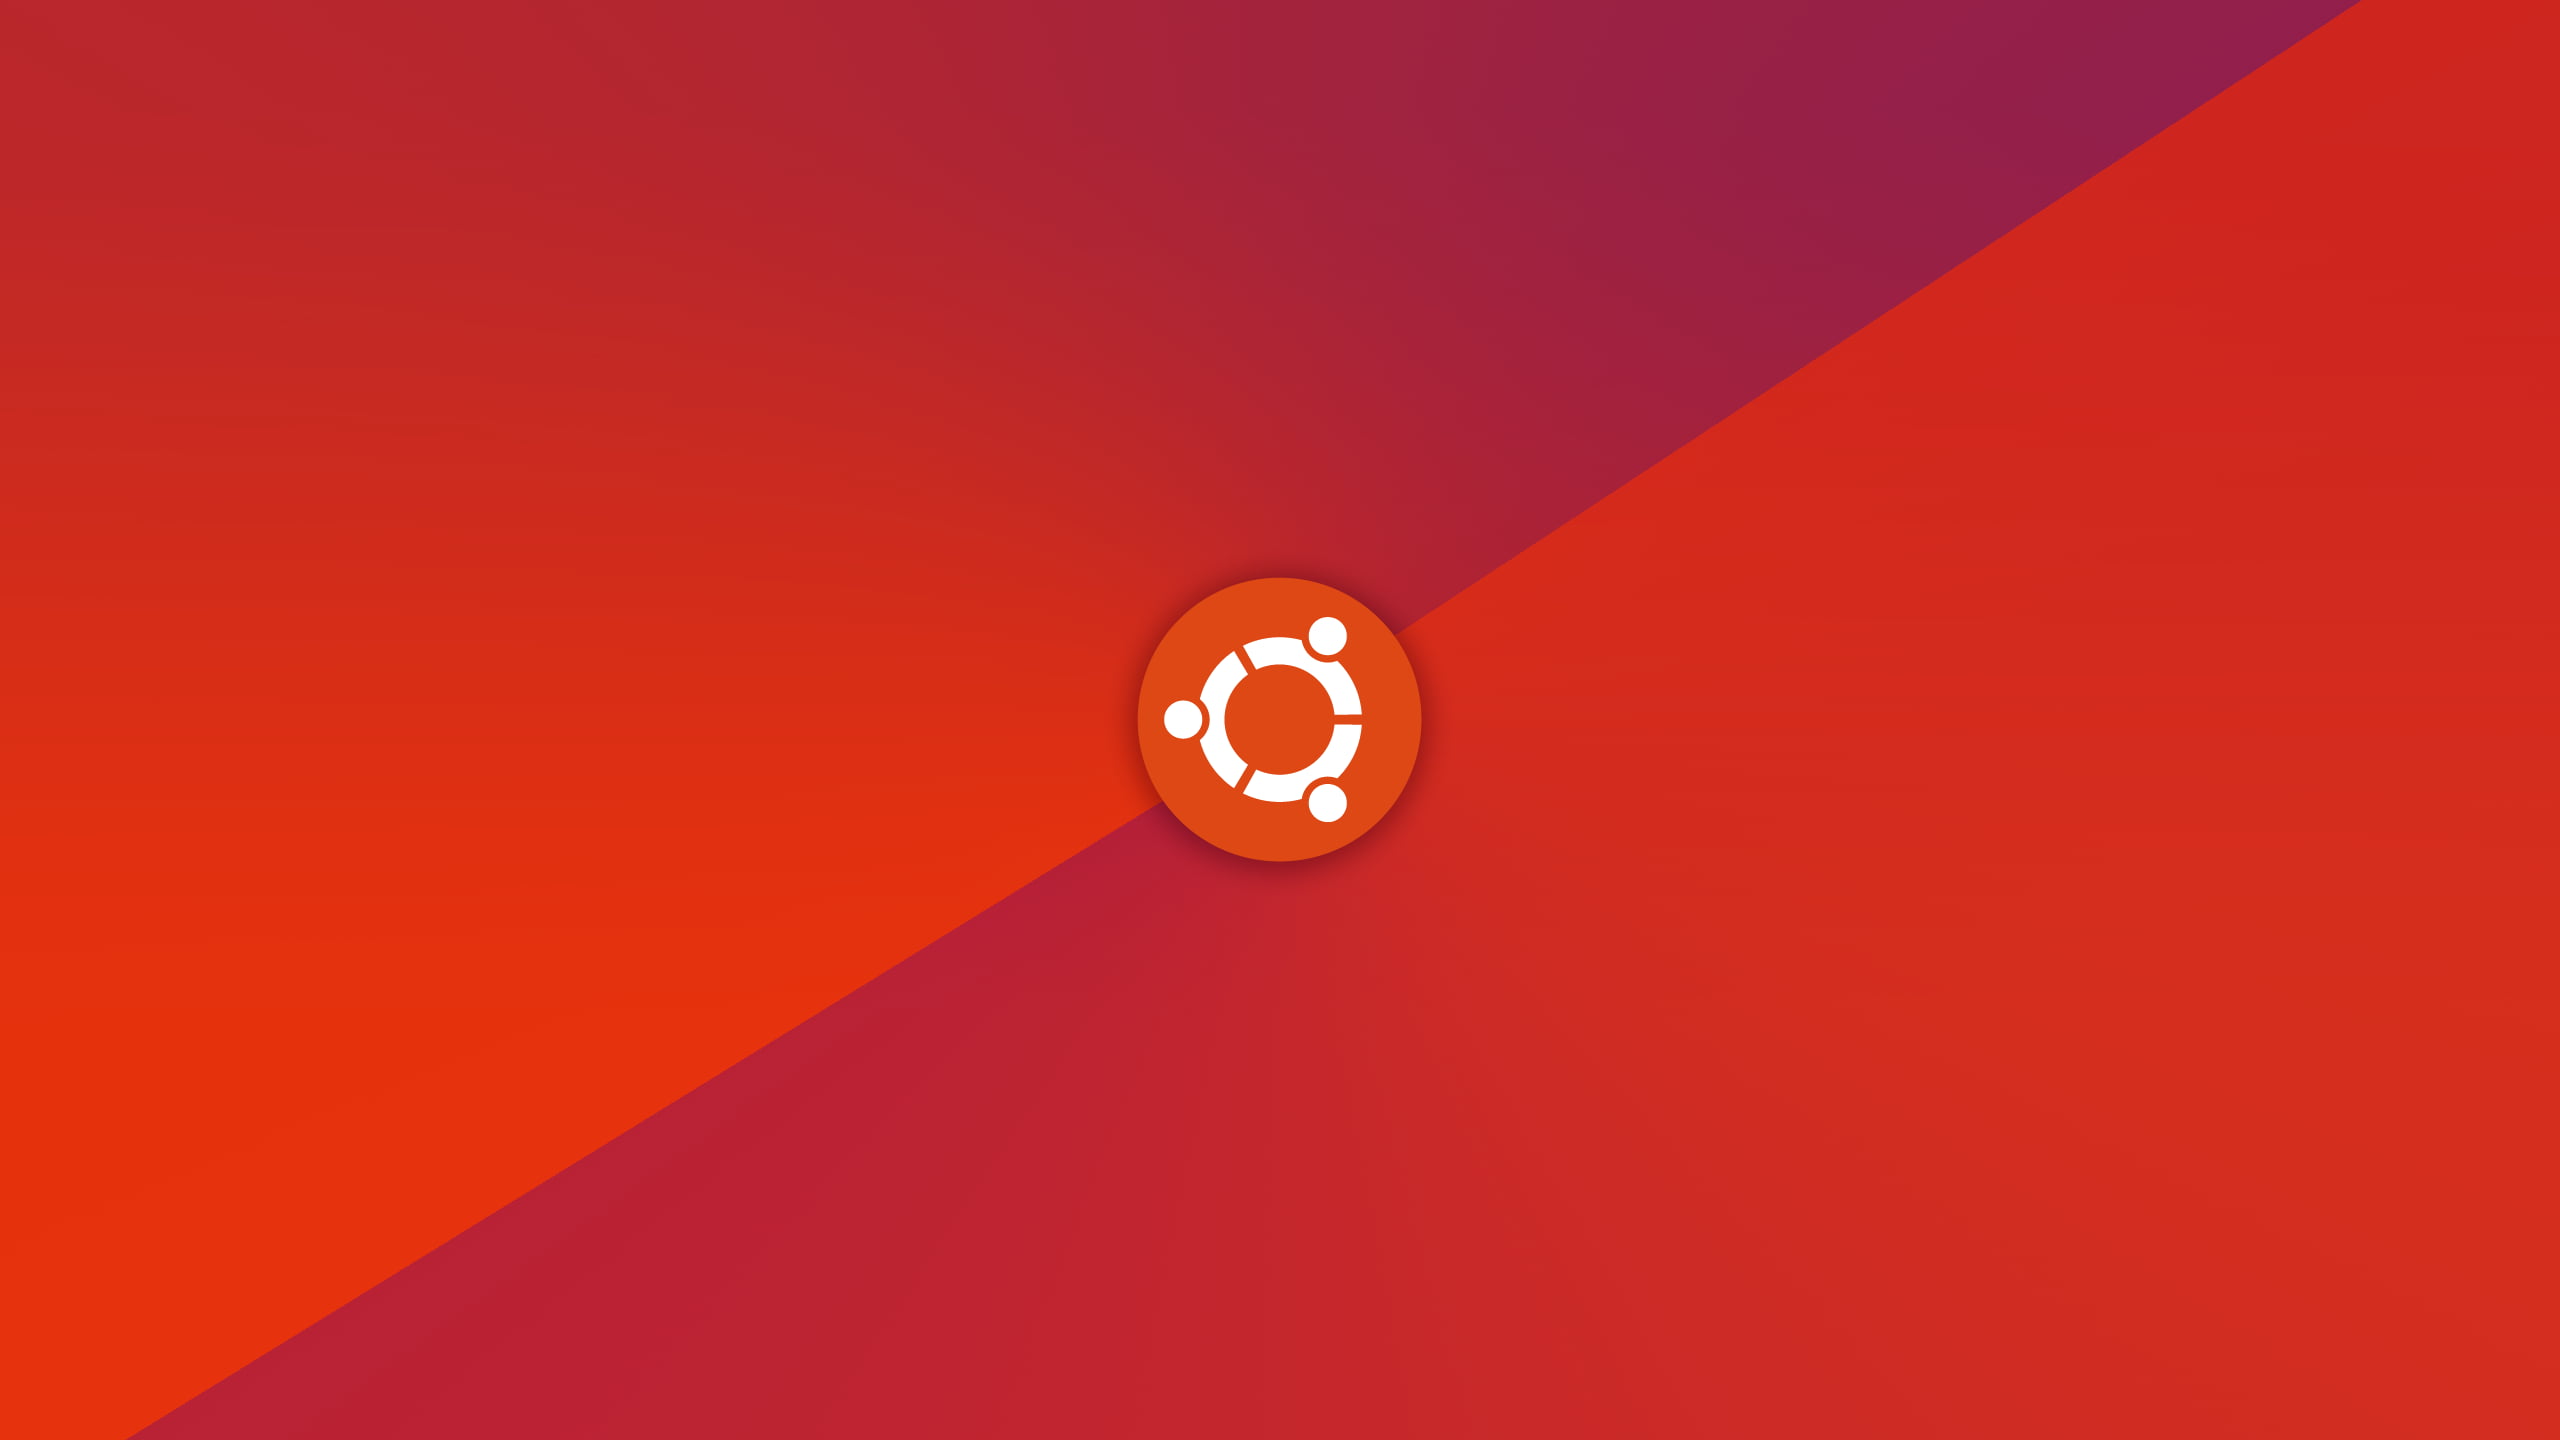 Ubuntu logo, operating system, red, no people, colored background